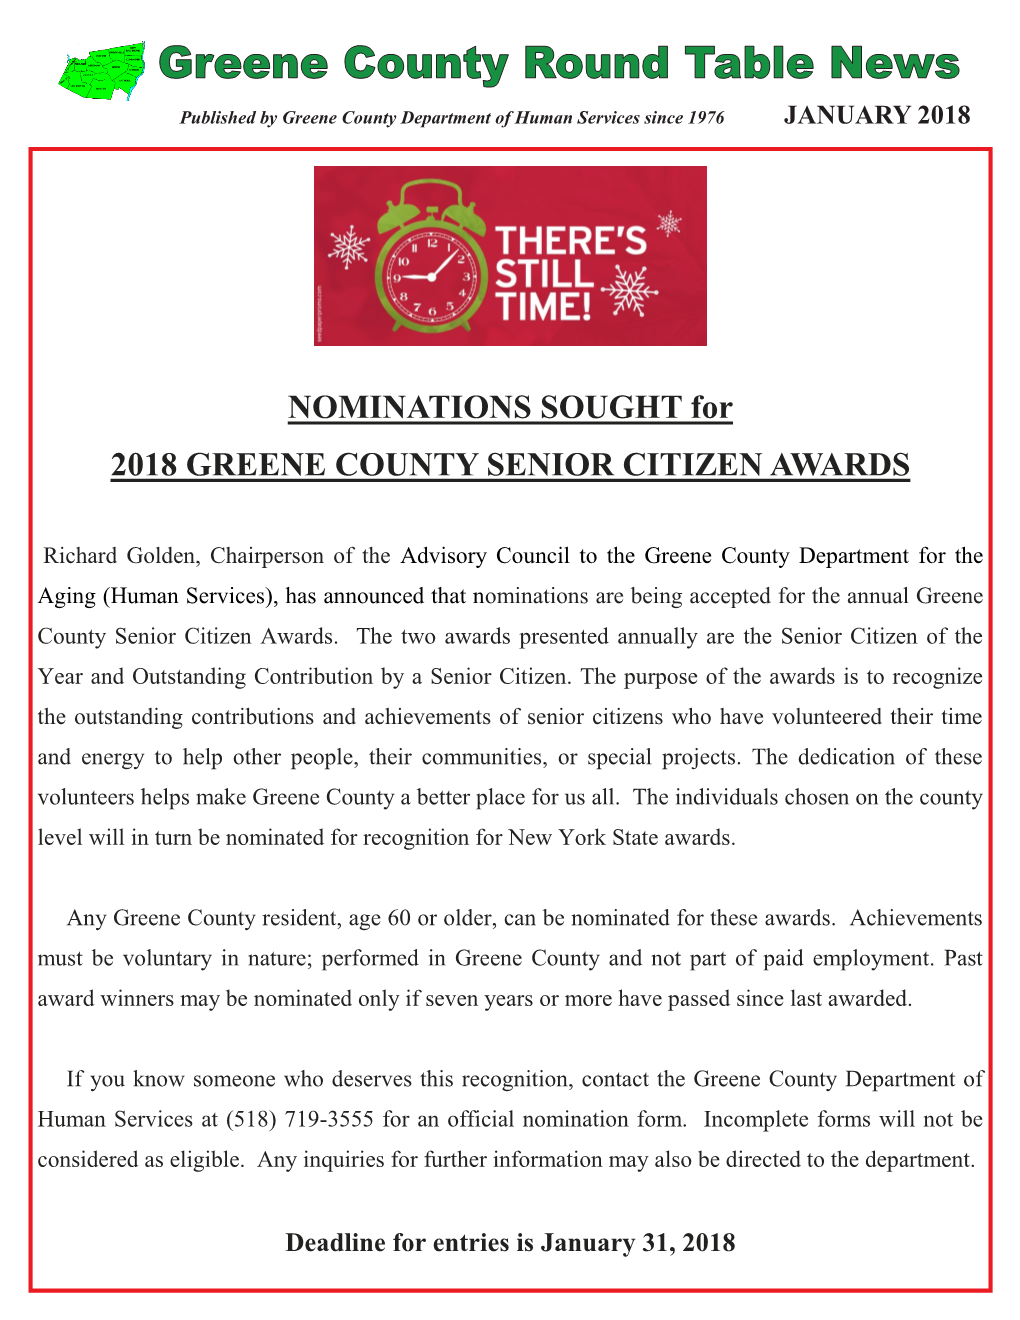 NOMINATIONS SOUGHT for 2018 GREENE COUNTY SENIOR CITIZEN AWARDS